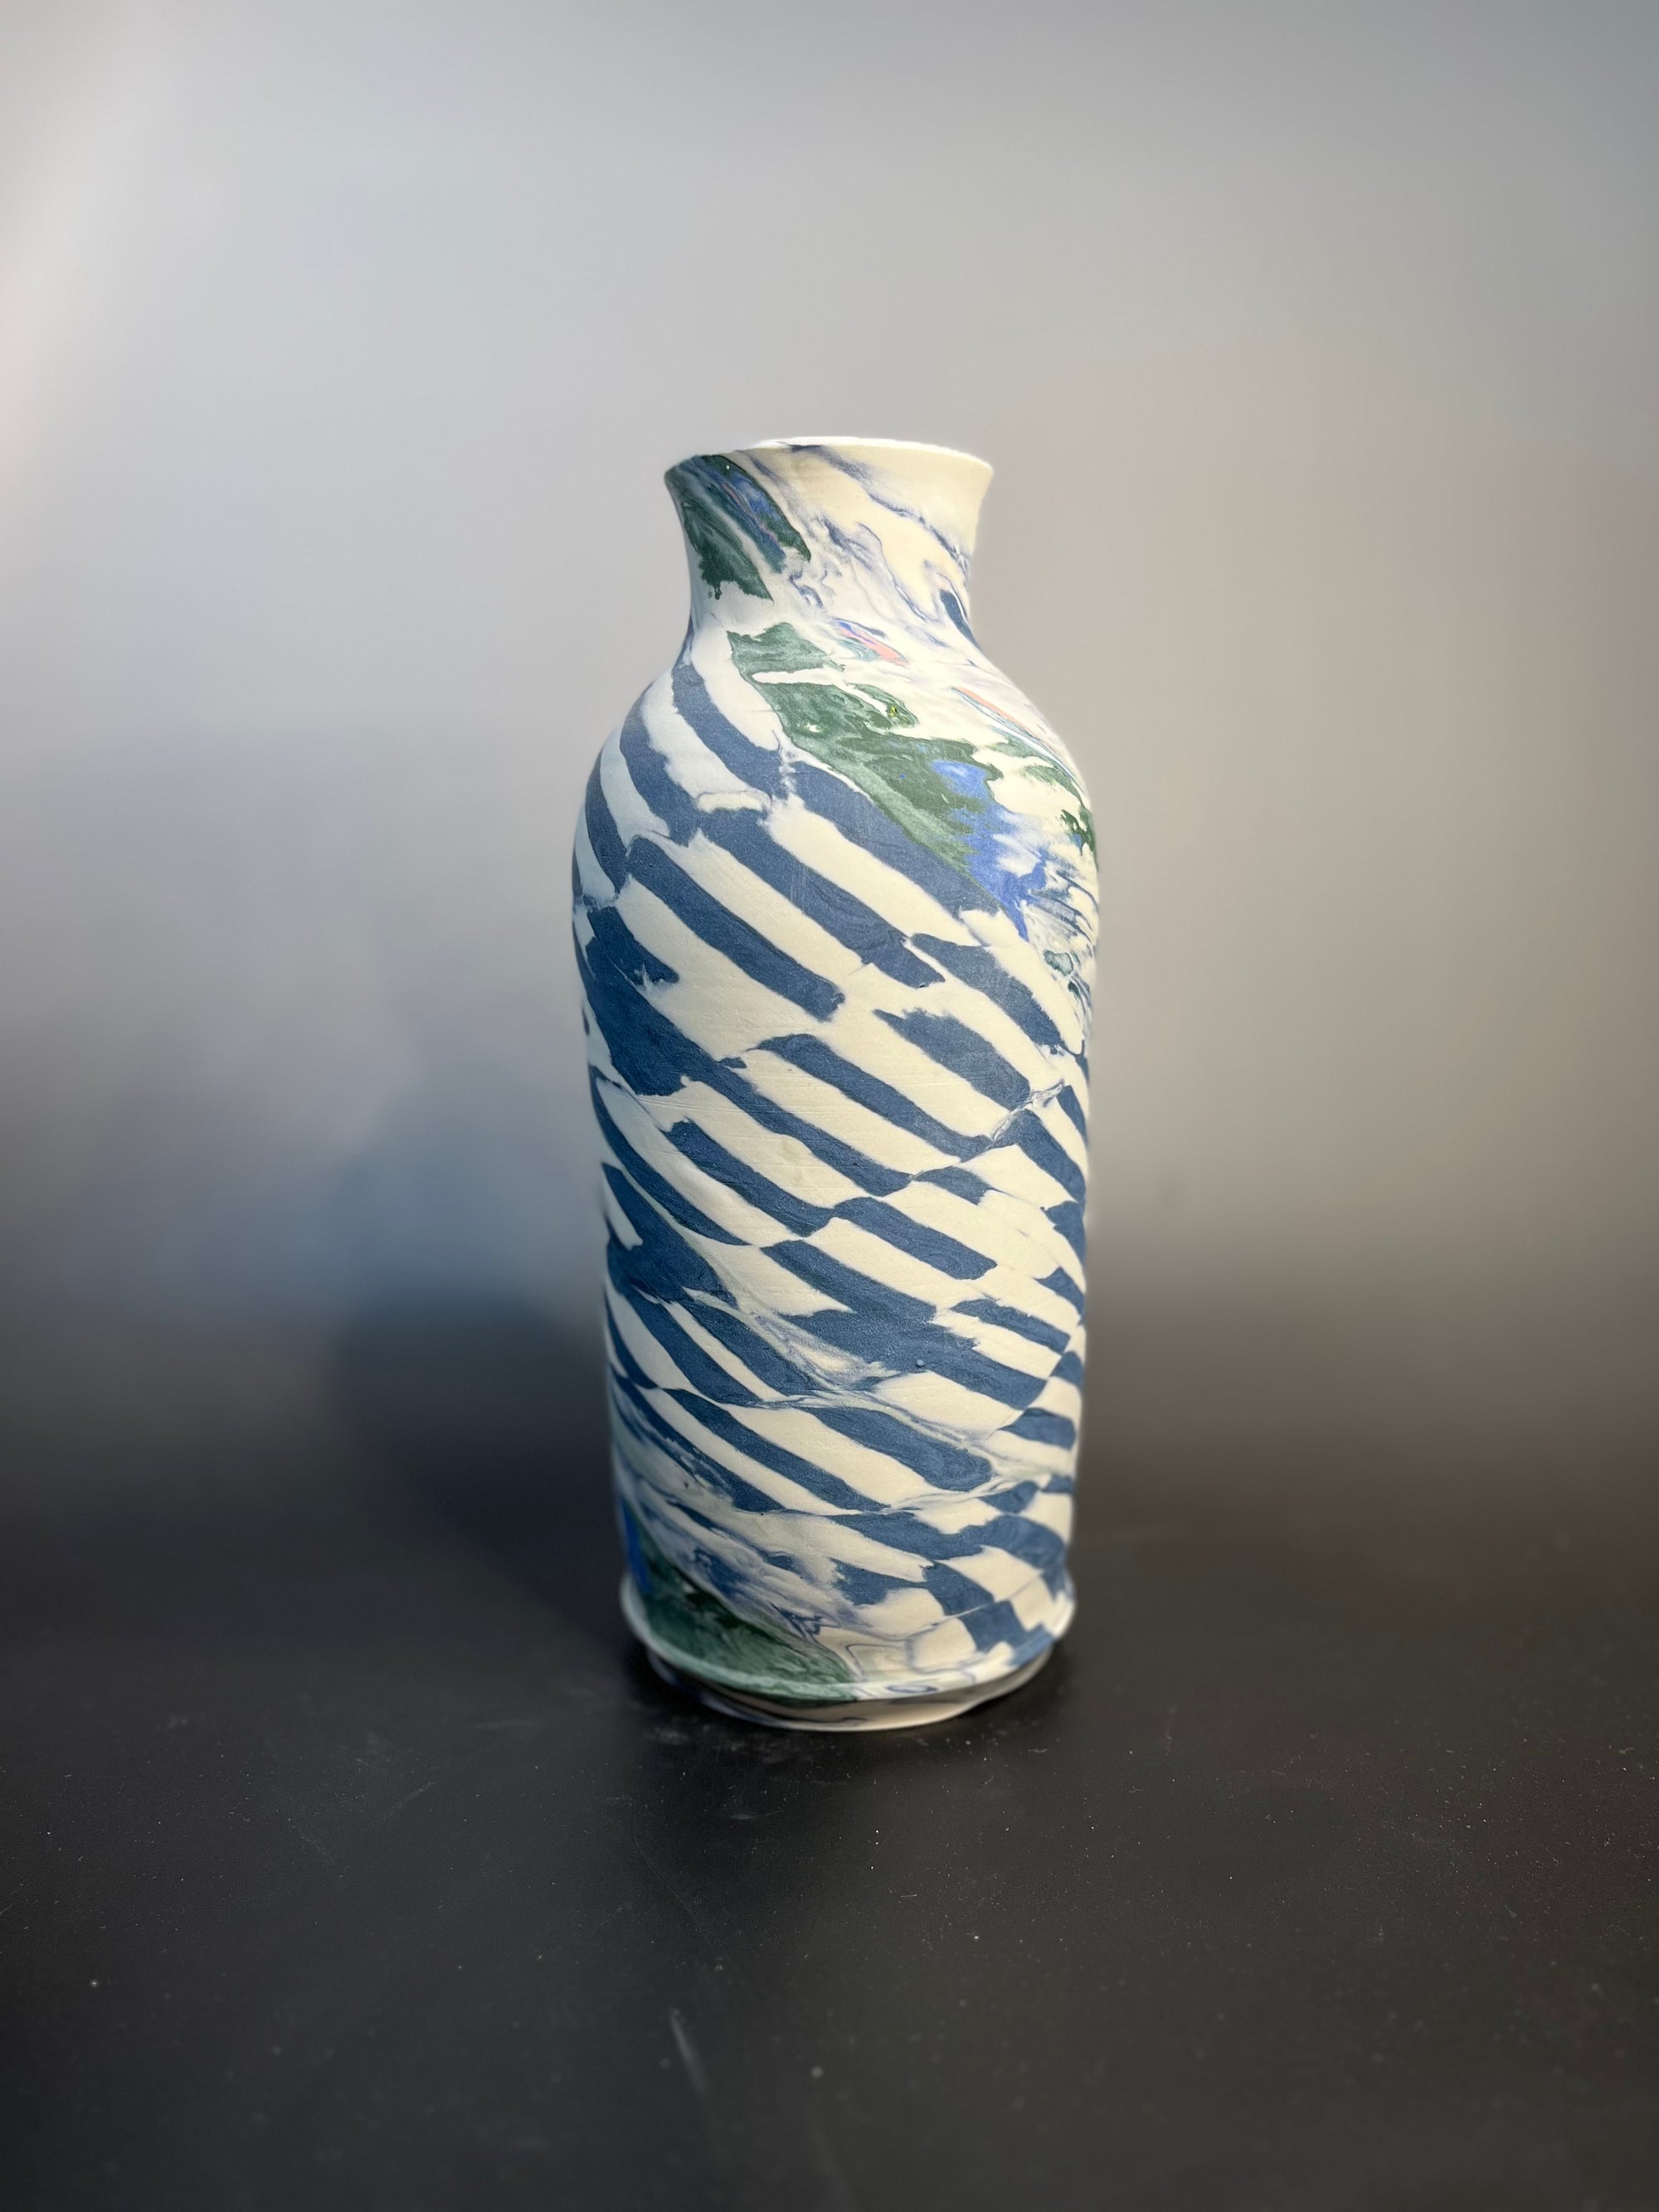 Large checkered bottle neck vase